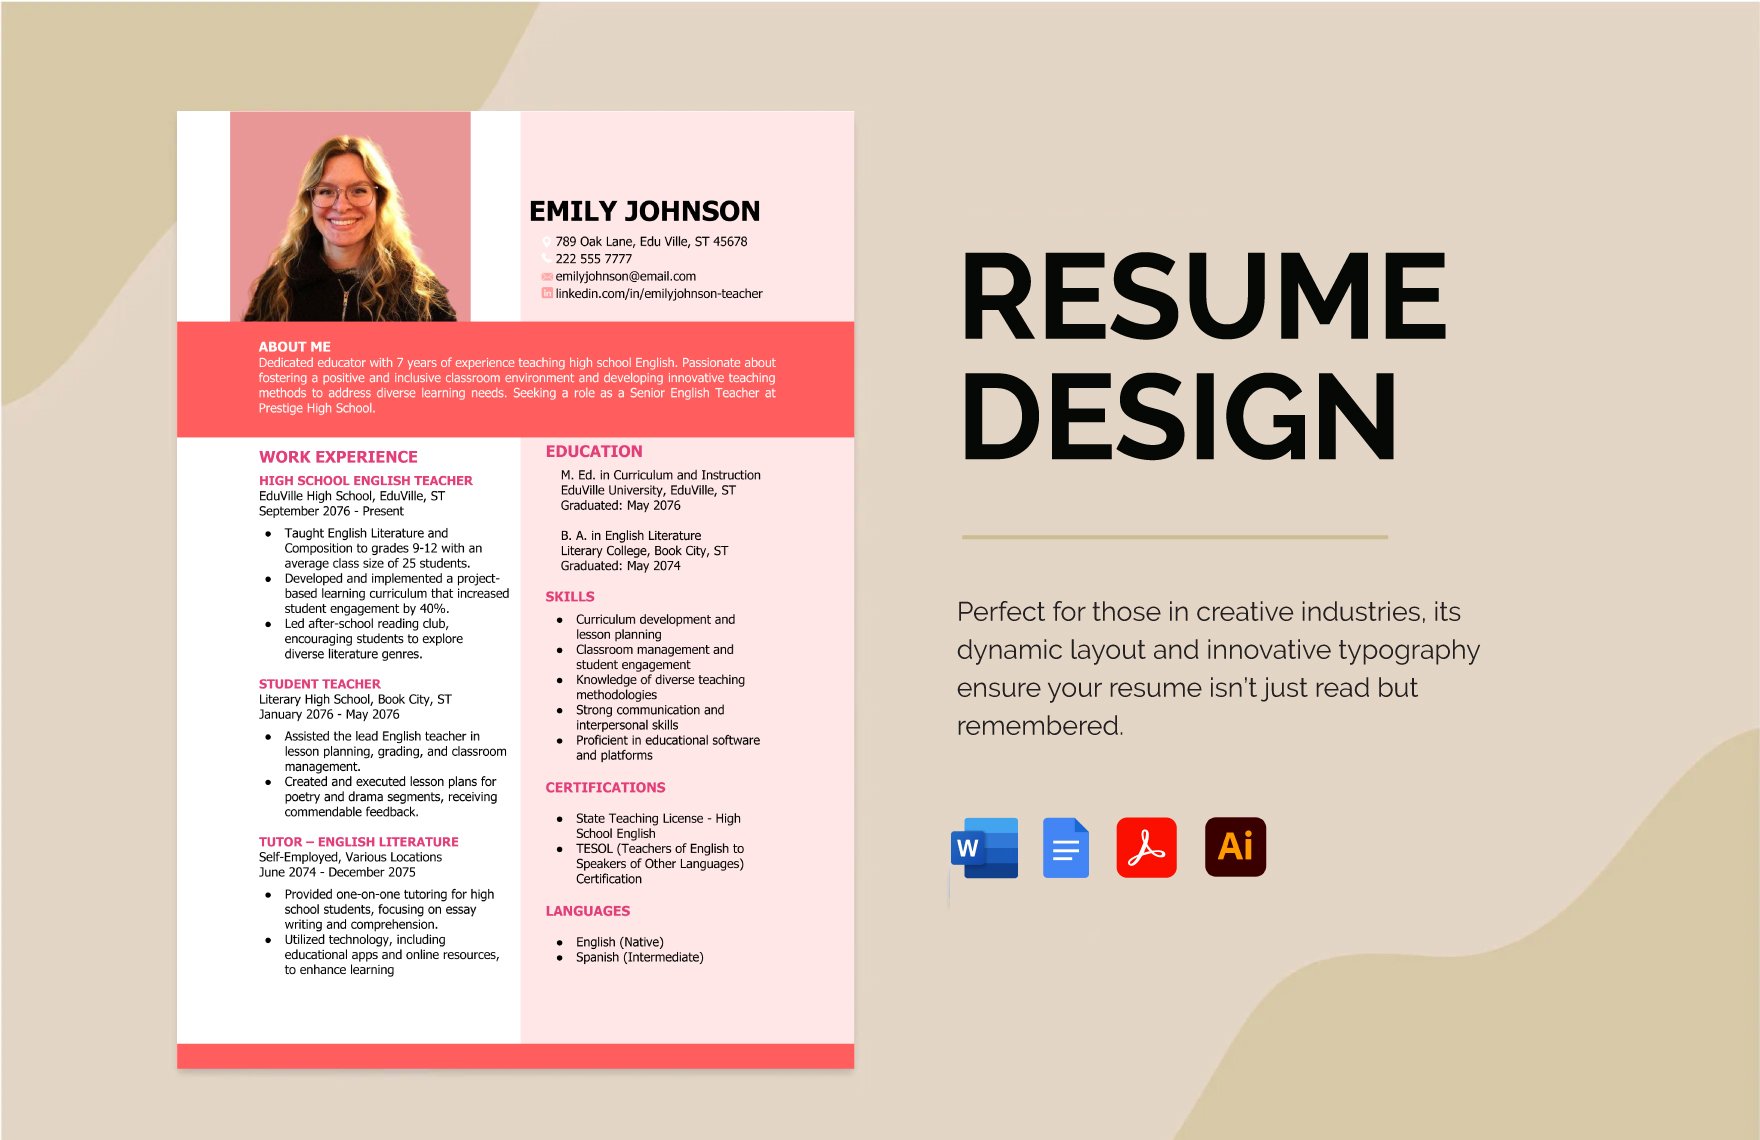 Free Resume Design Template